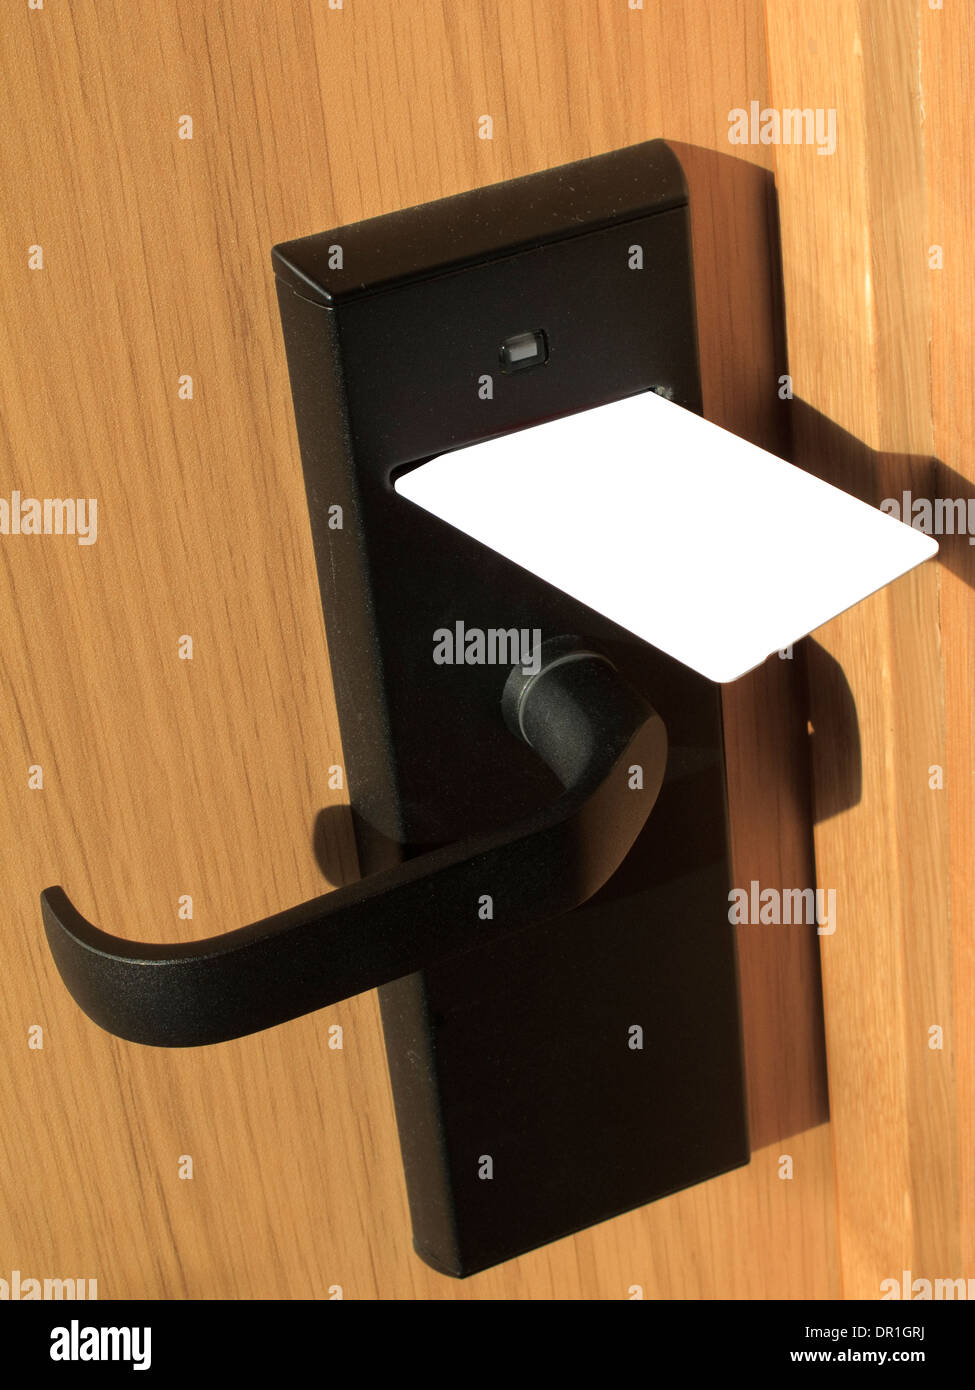 hotel-door-magnetic-card-key-DR1GRJ.jpg